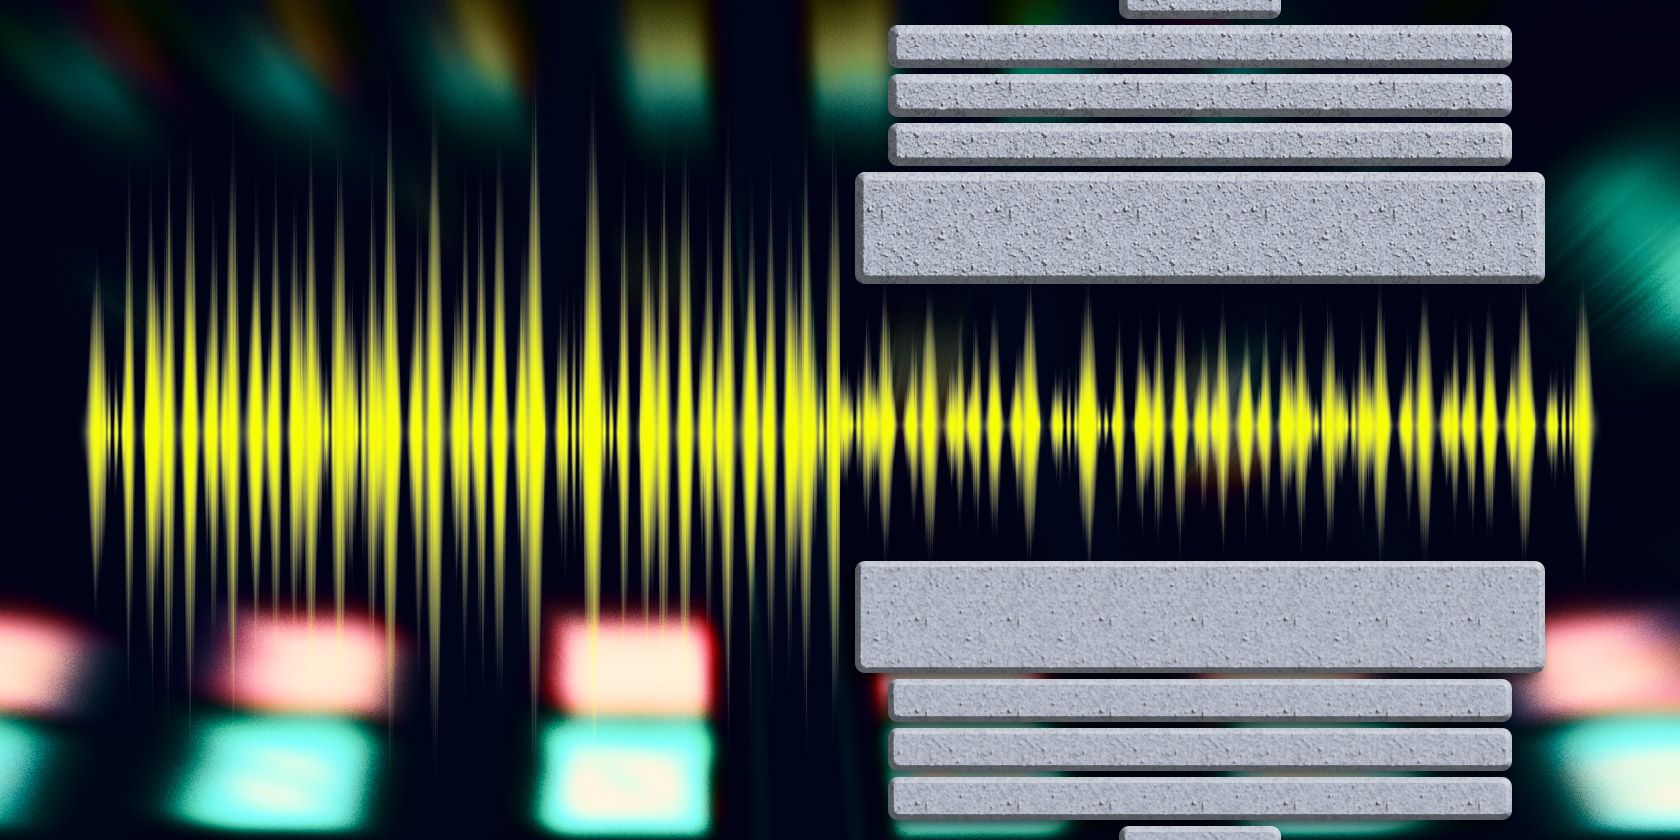 audio compression explained